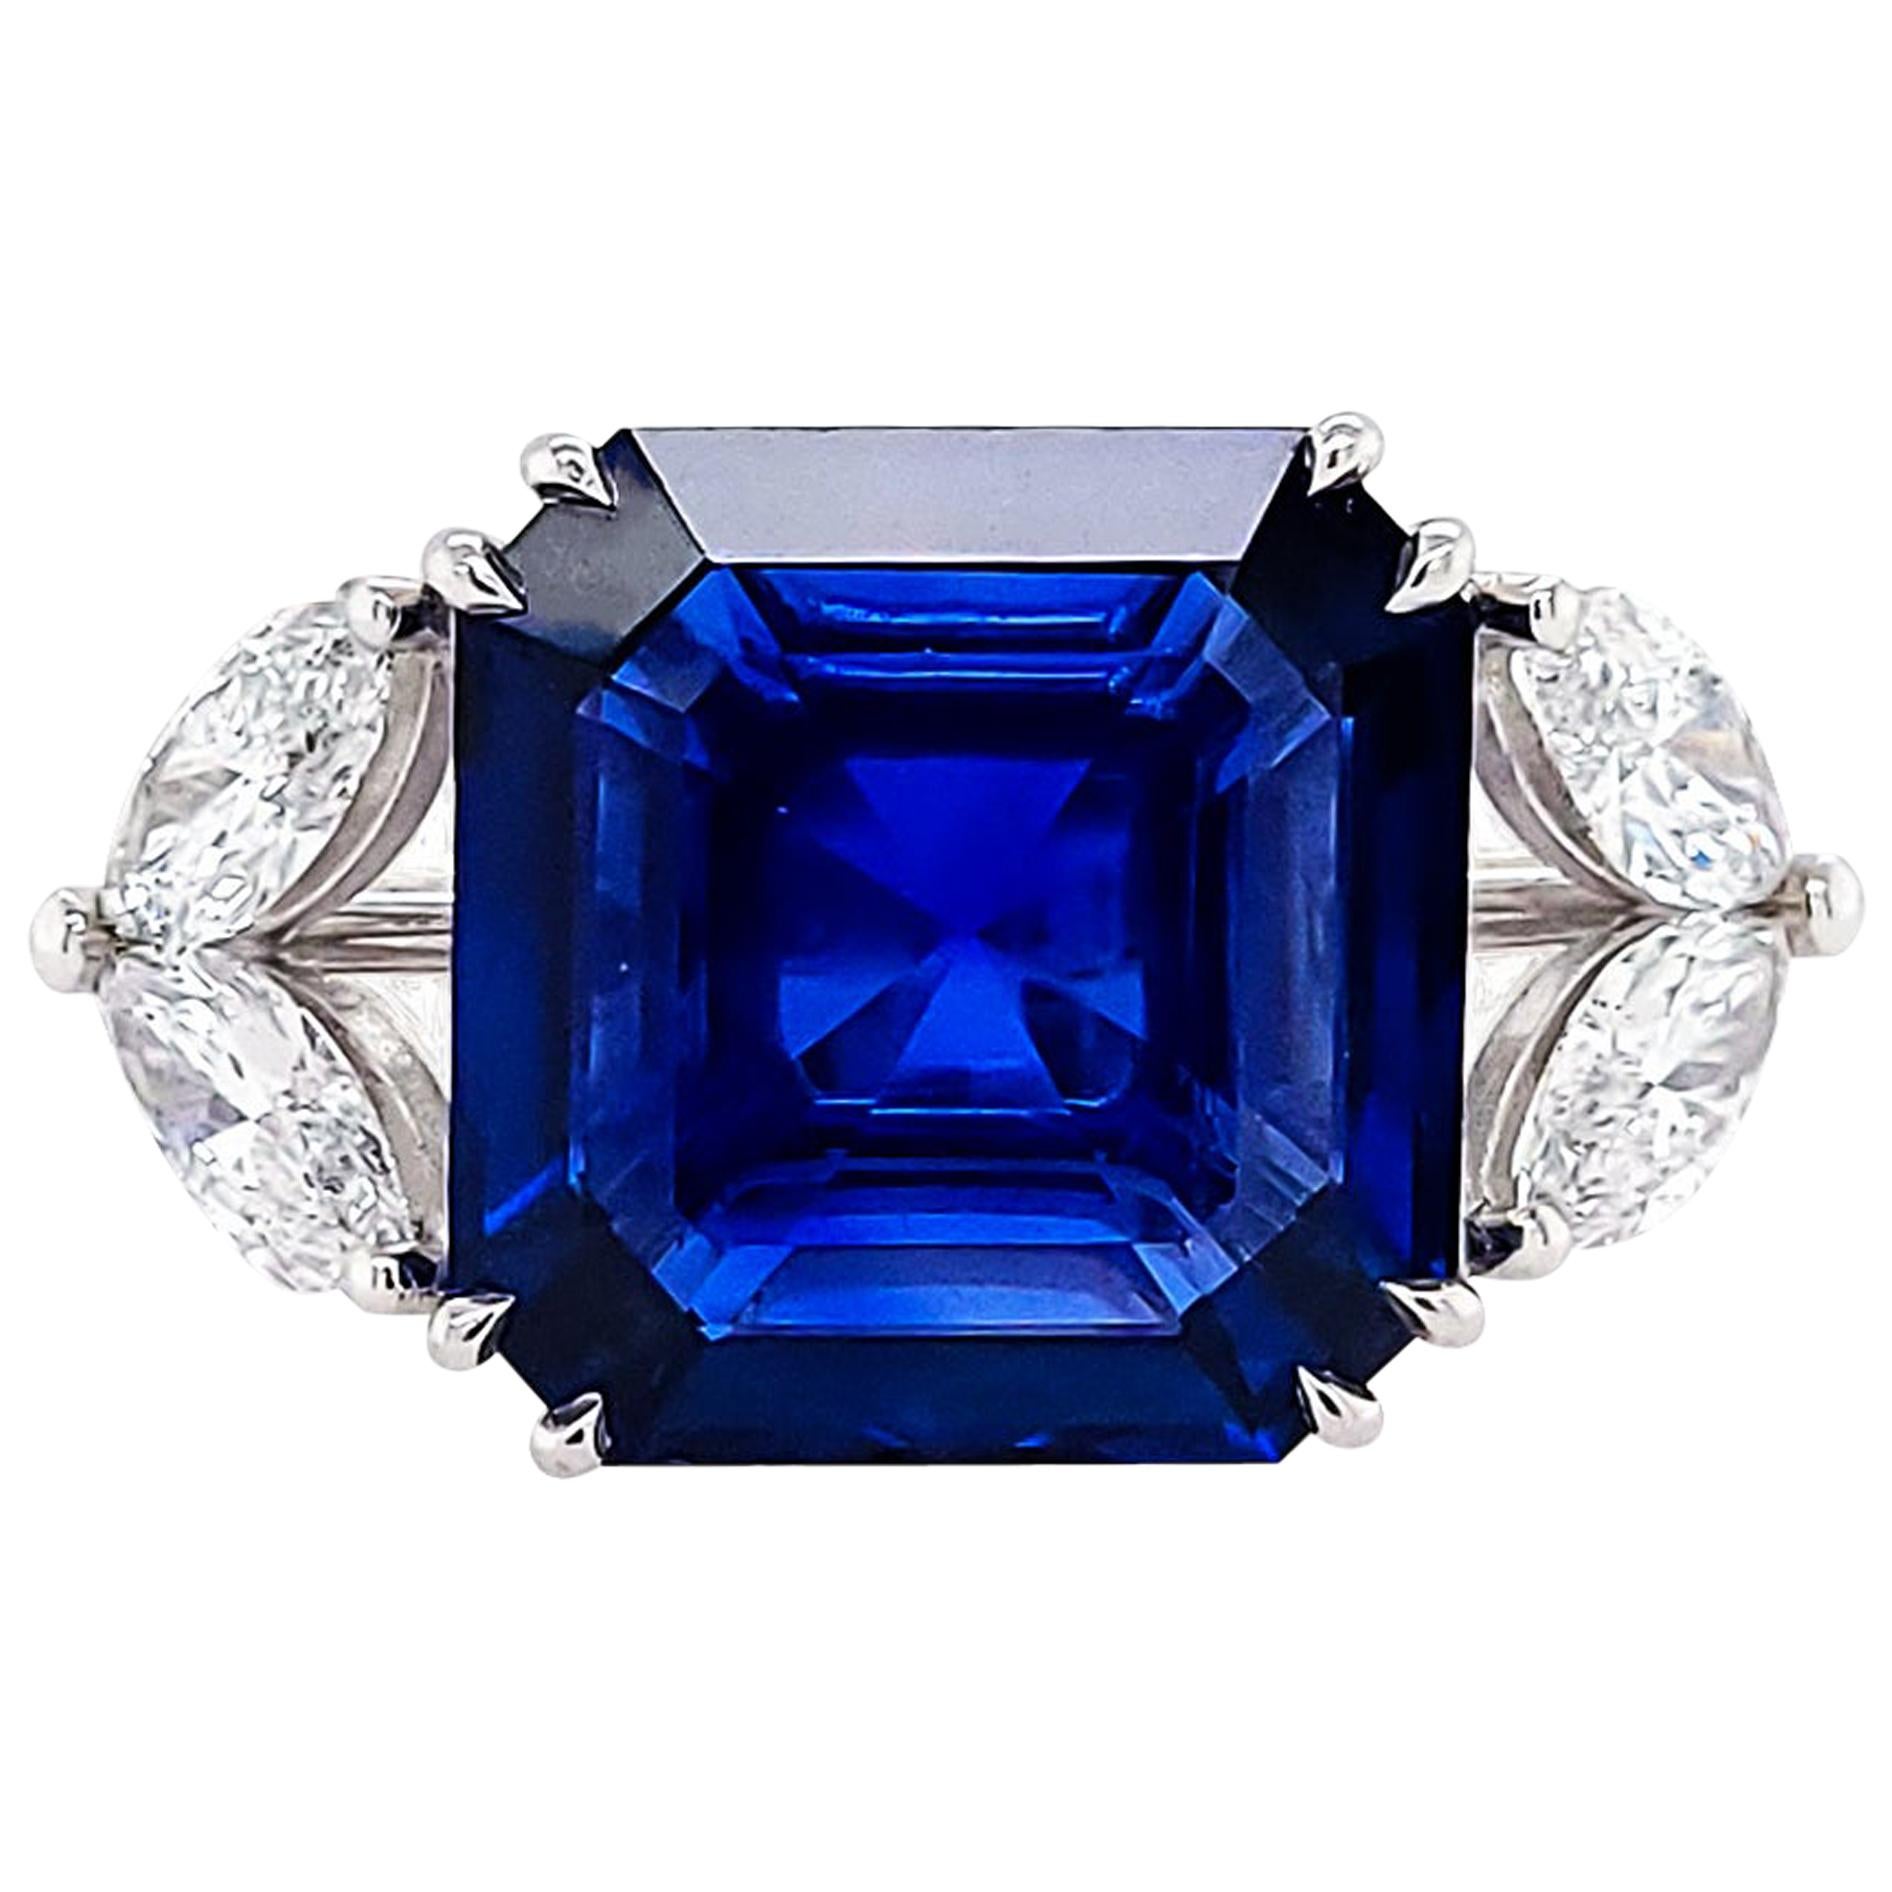 Spectra Fine Jewelry SSEF Certified 10 Carat Burma Sapphire Diamond Ring